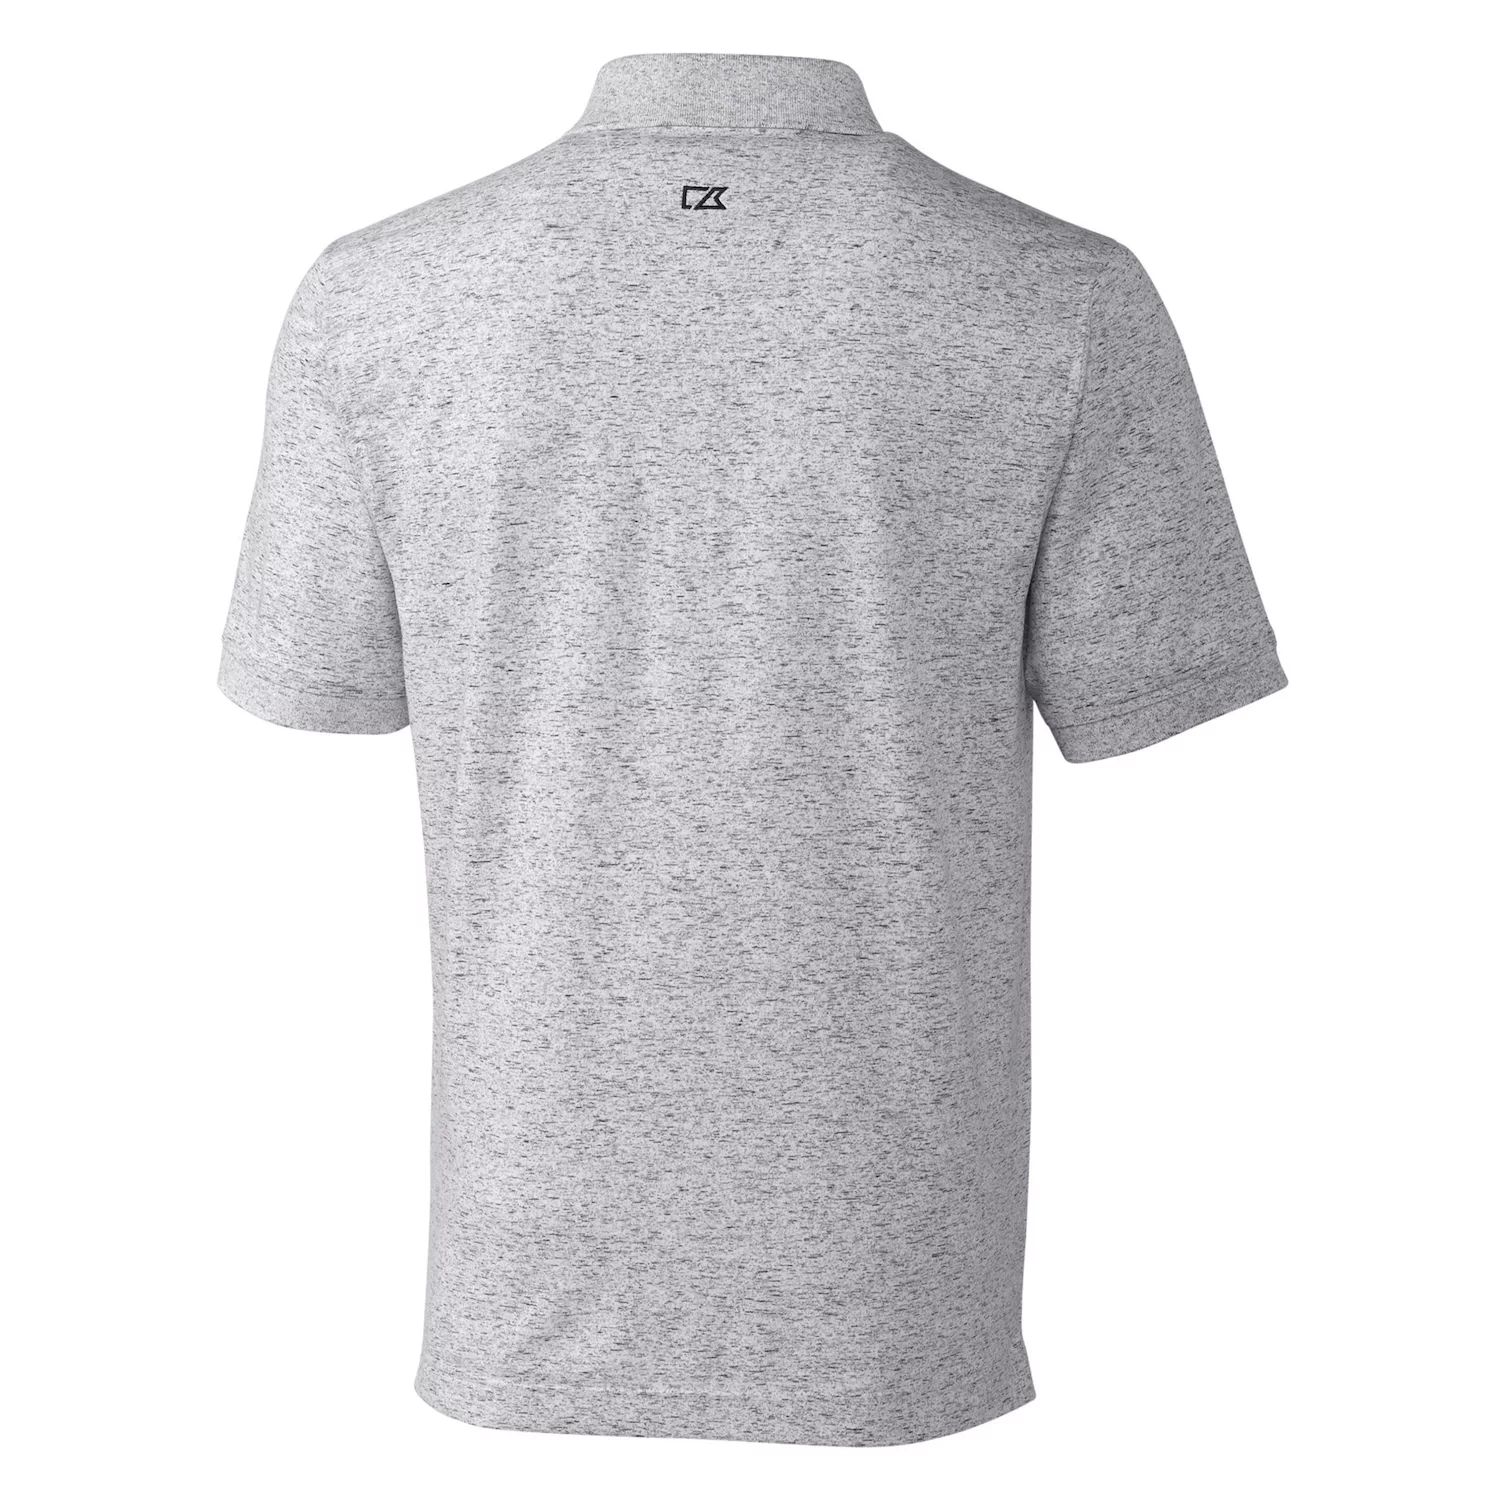 Мужская футболка-поло Advantage Tri-Blend Space Dye Cutter & Buck